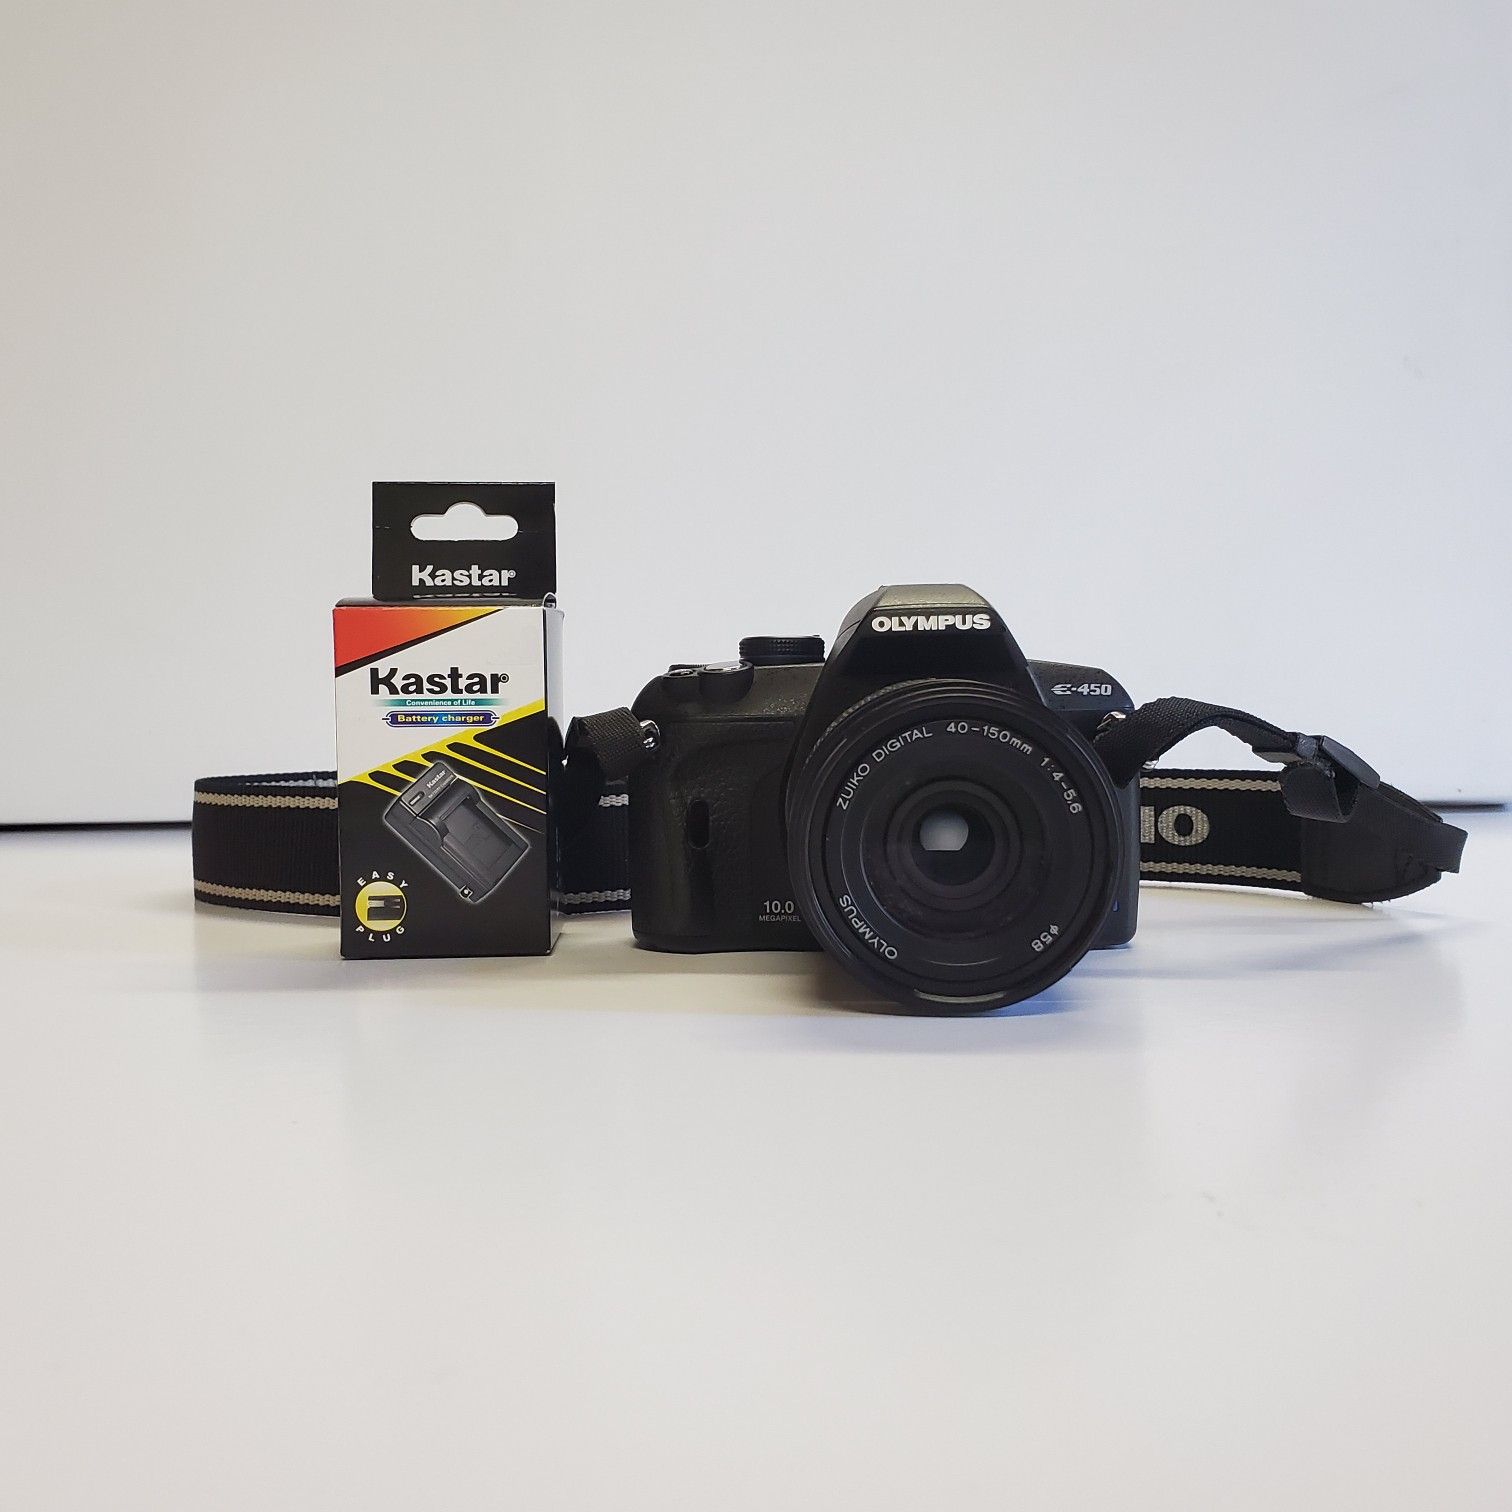 Olympus e-450 10.0 megapixel dslr camera